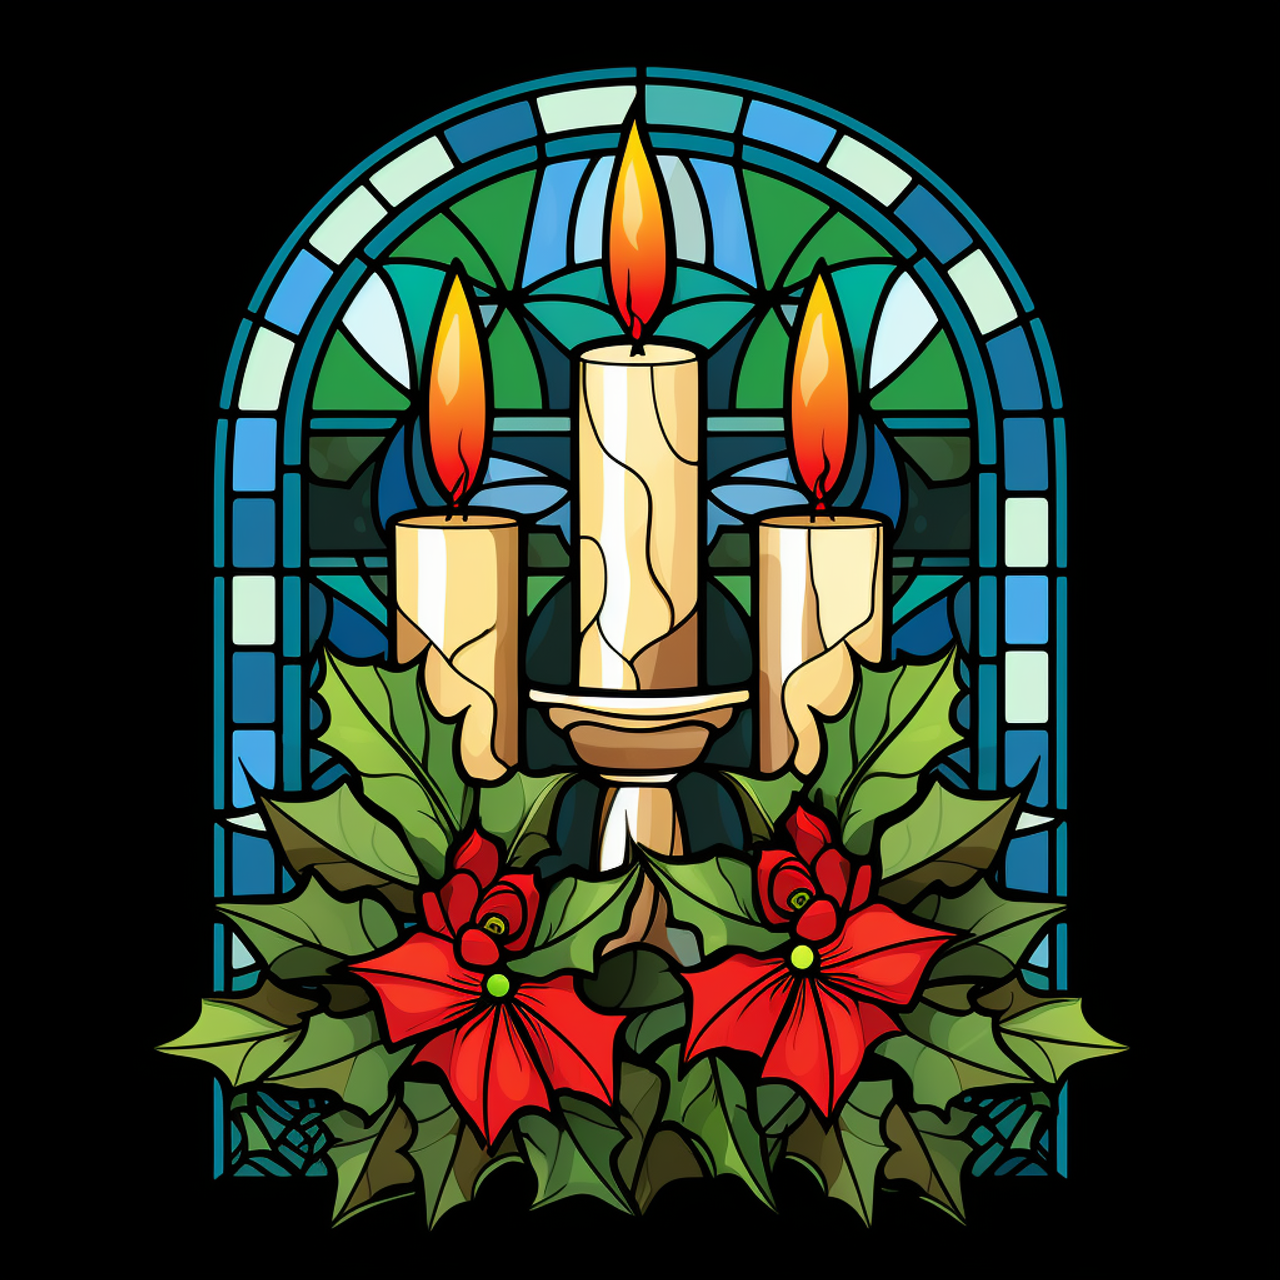 Holiday Window Christmas Candles – Diamond Painting